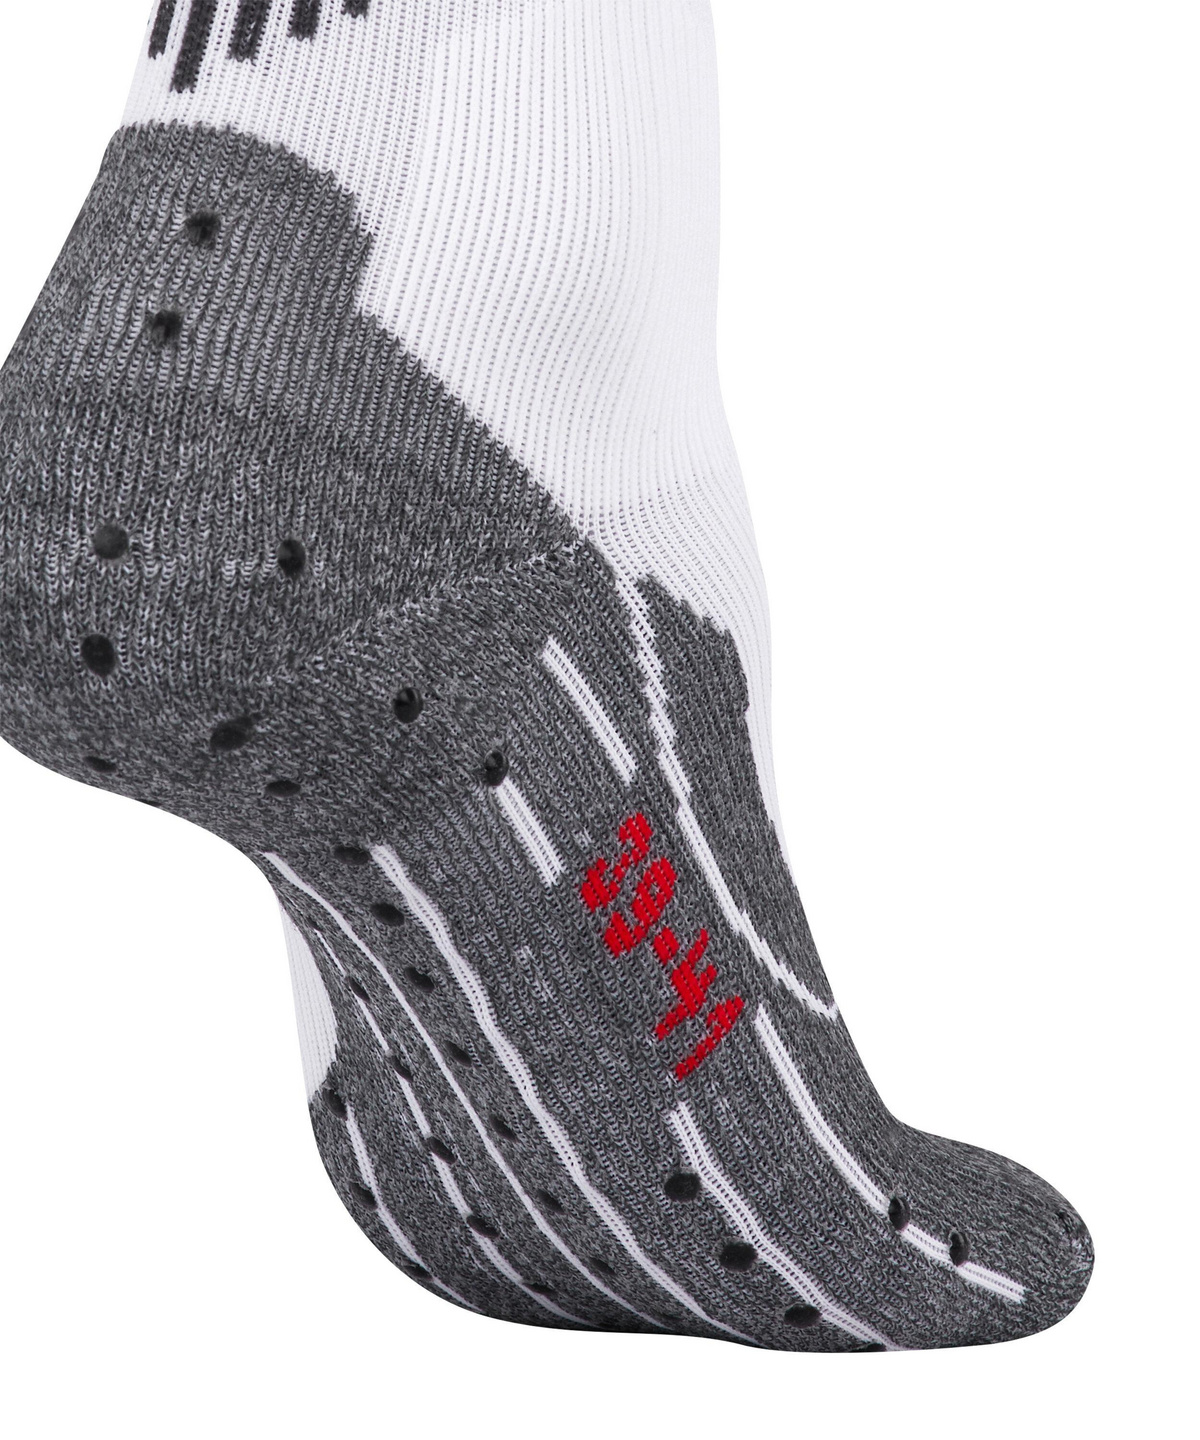 Falke 4 Grip Stabilizing Socks 2024